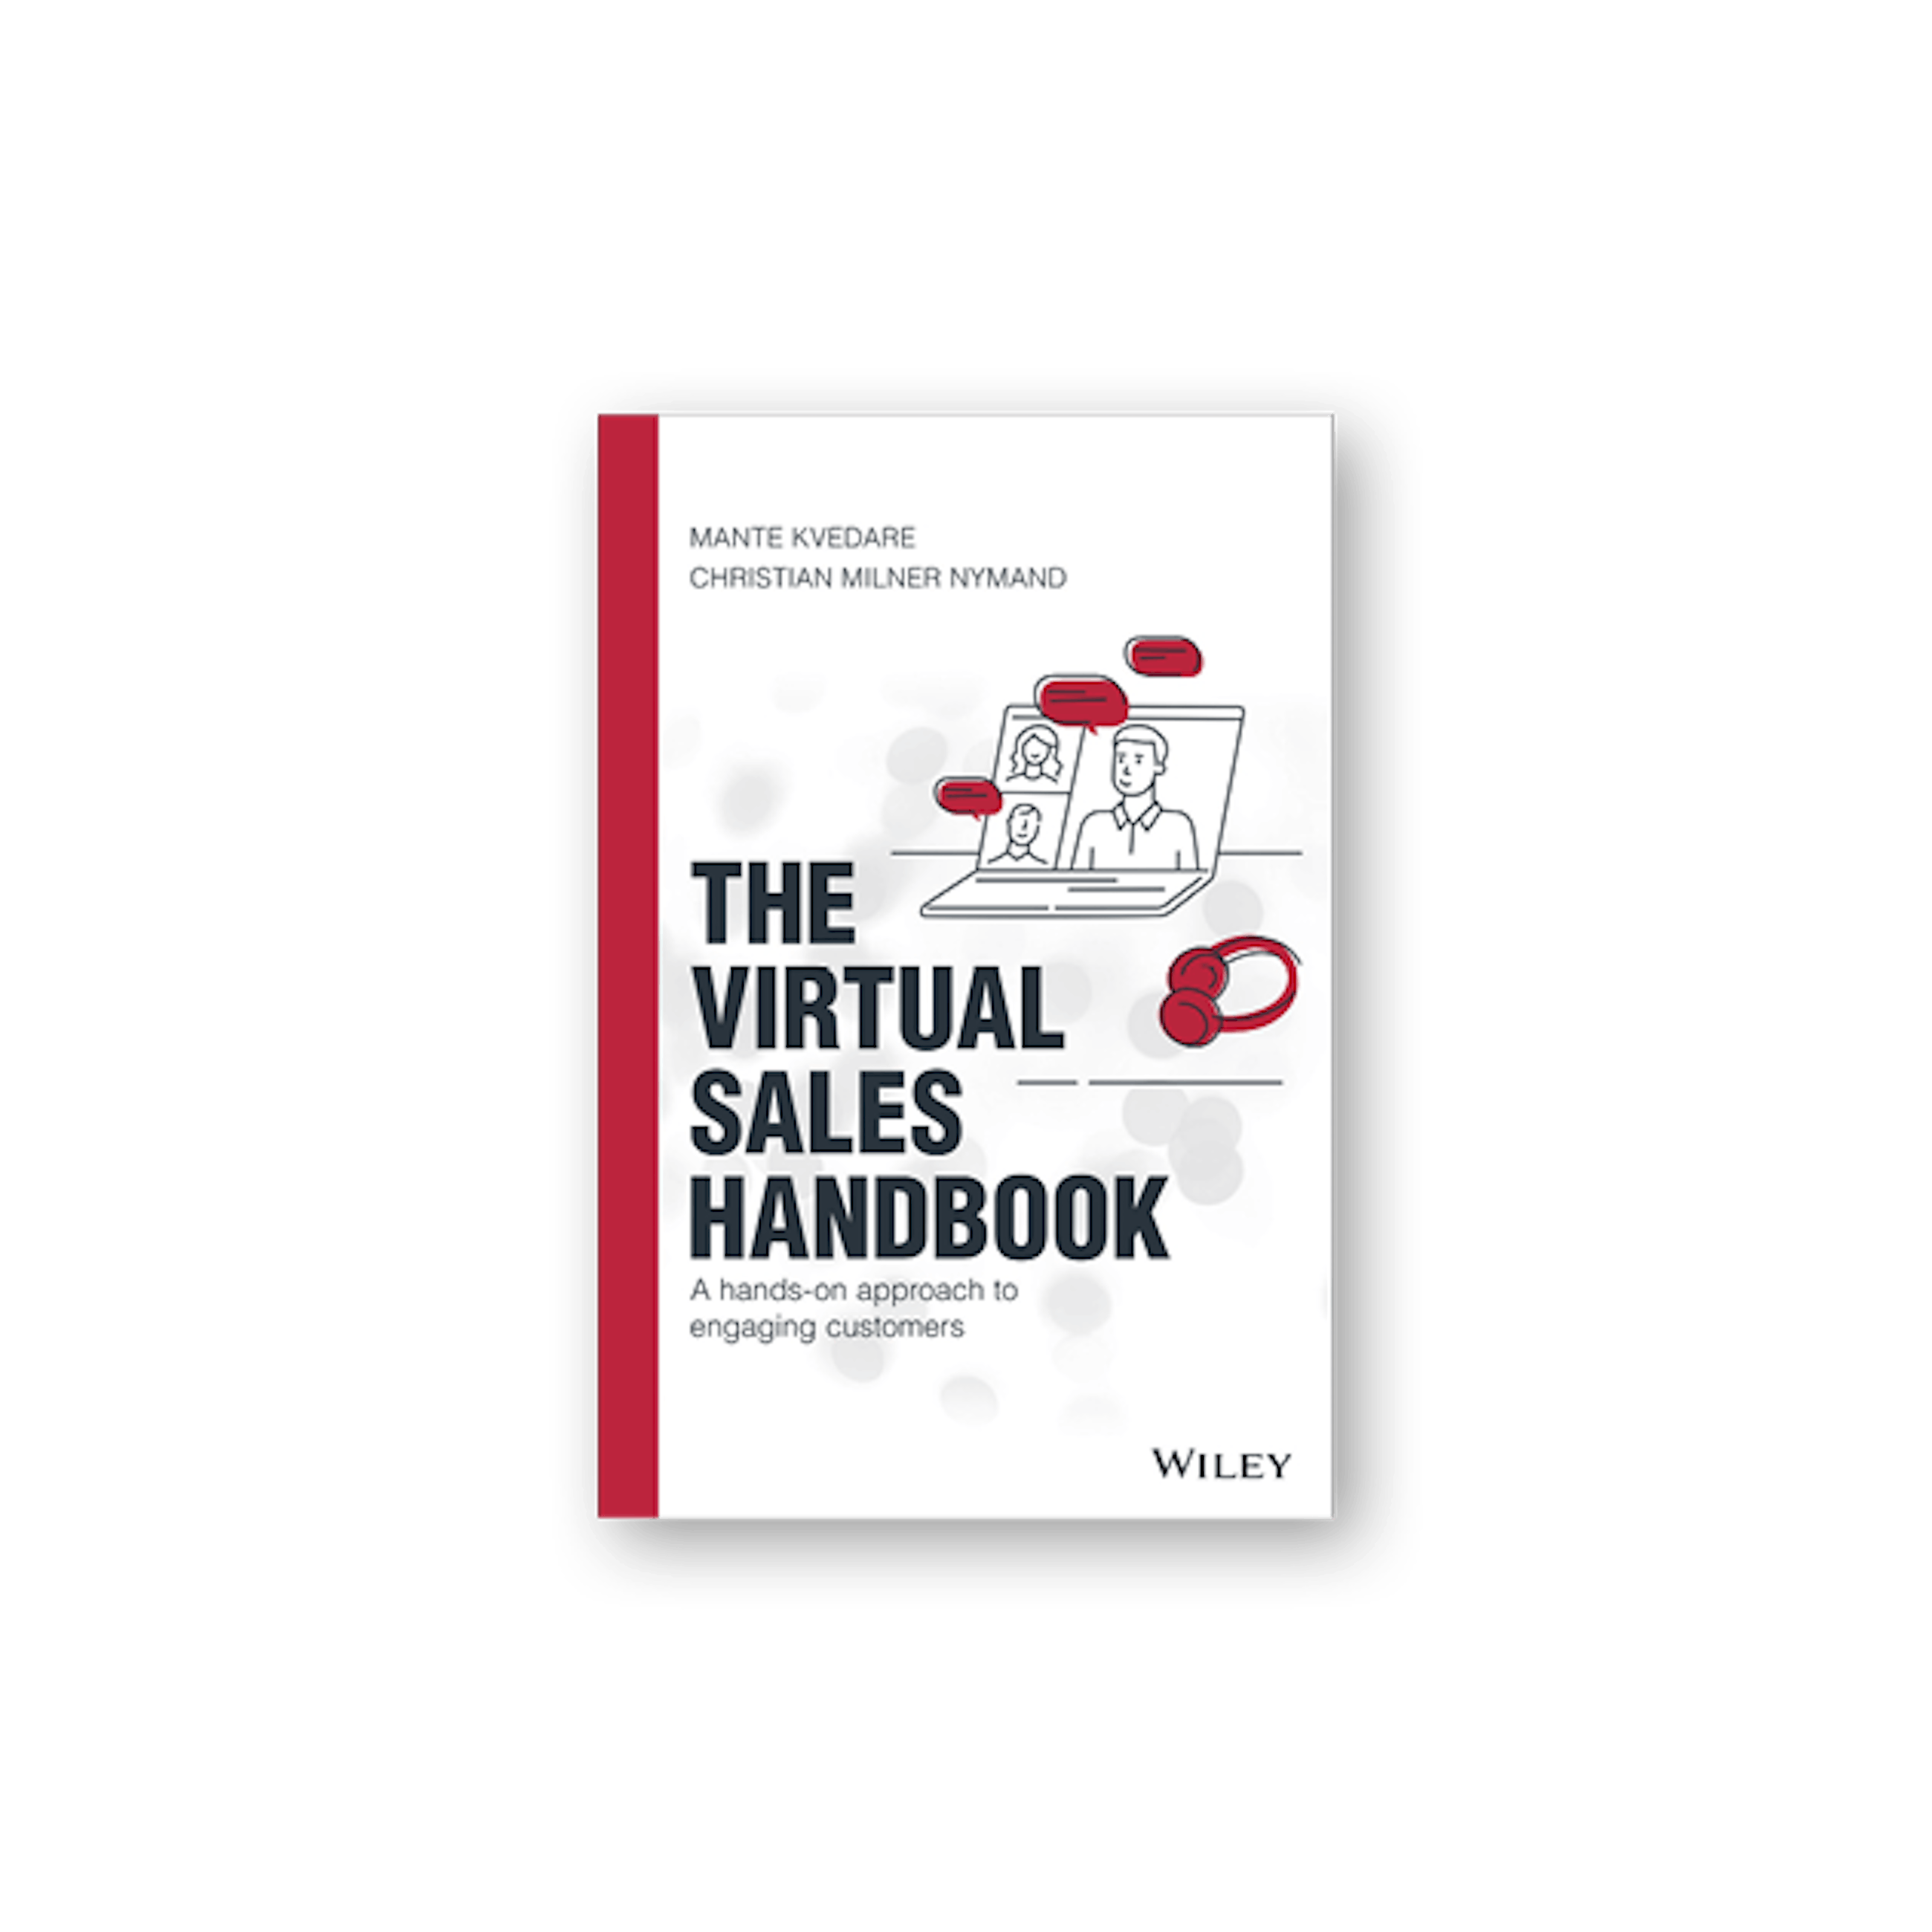 BOOK The virtual sales handbook